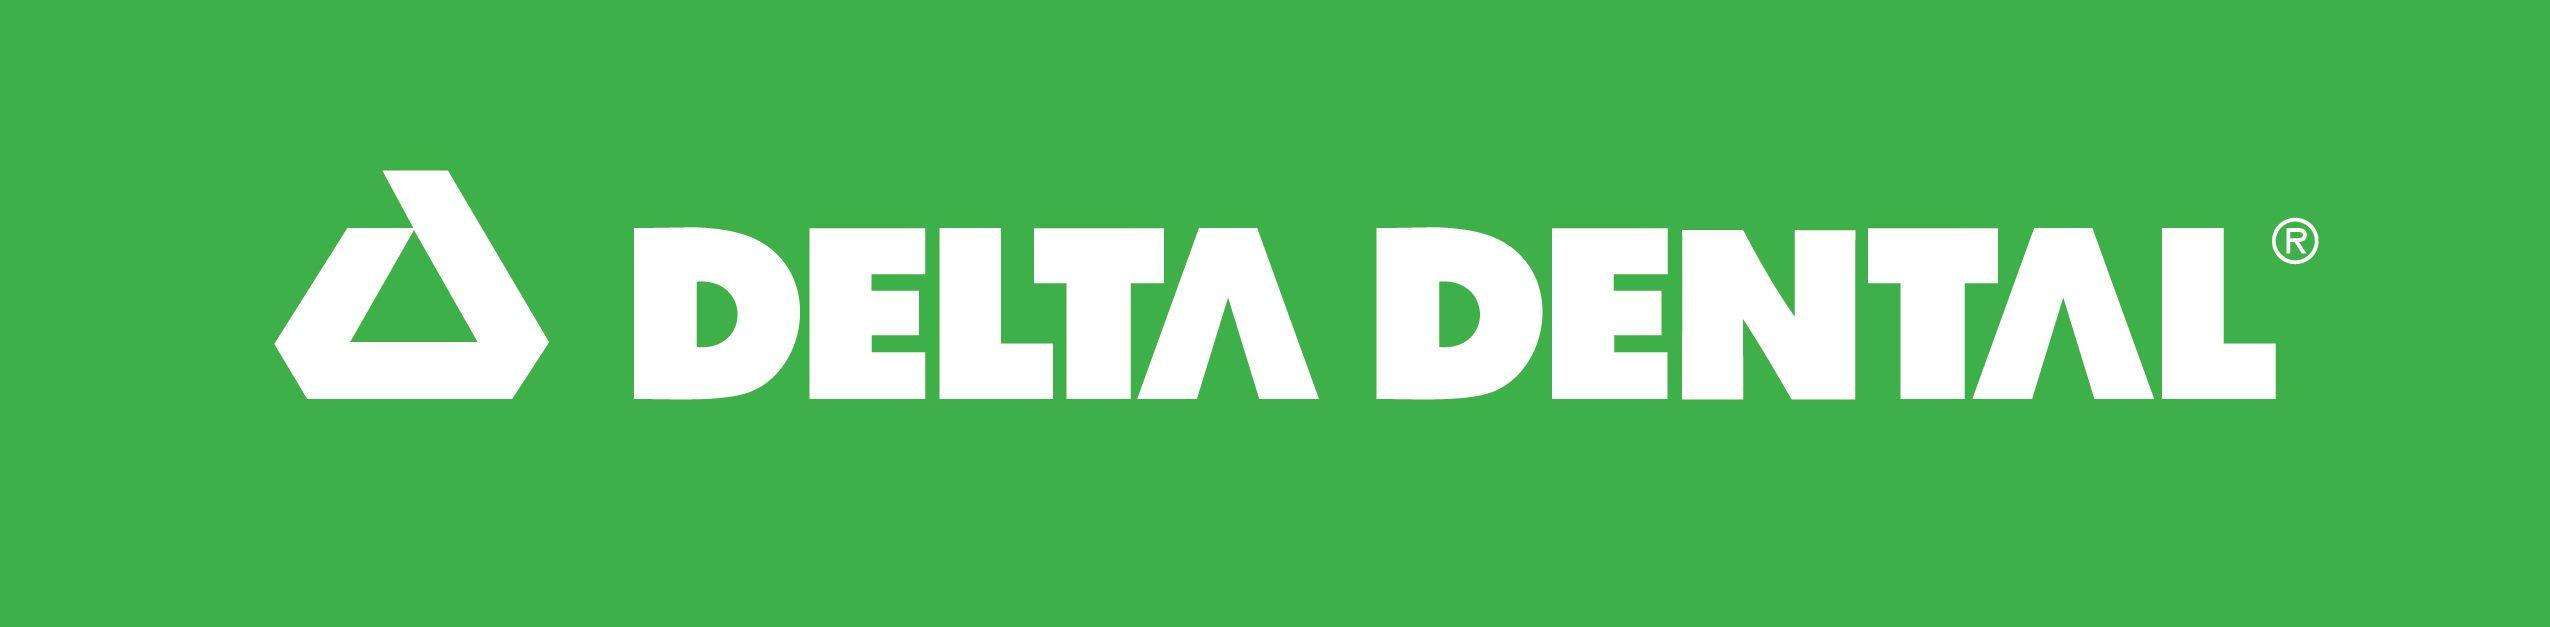 Delta Dental Logo - Logo Usage